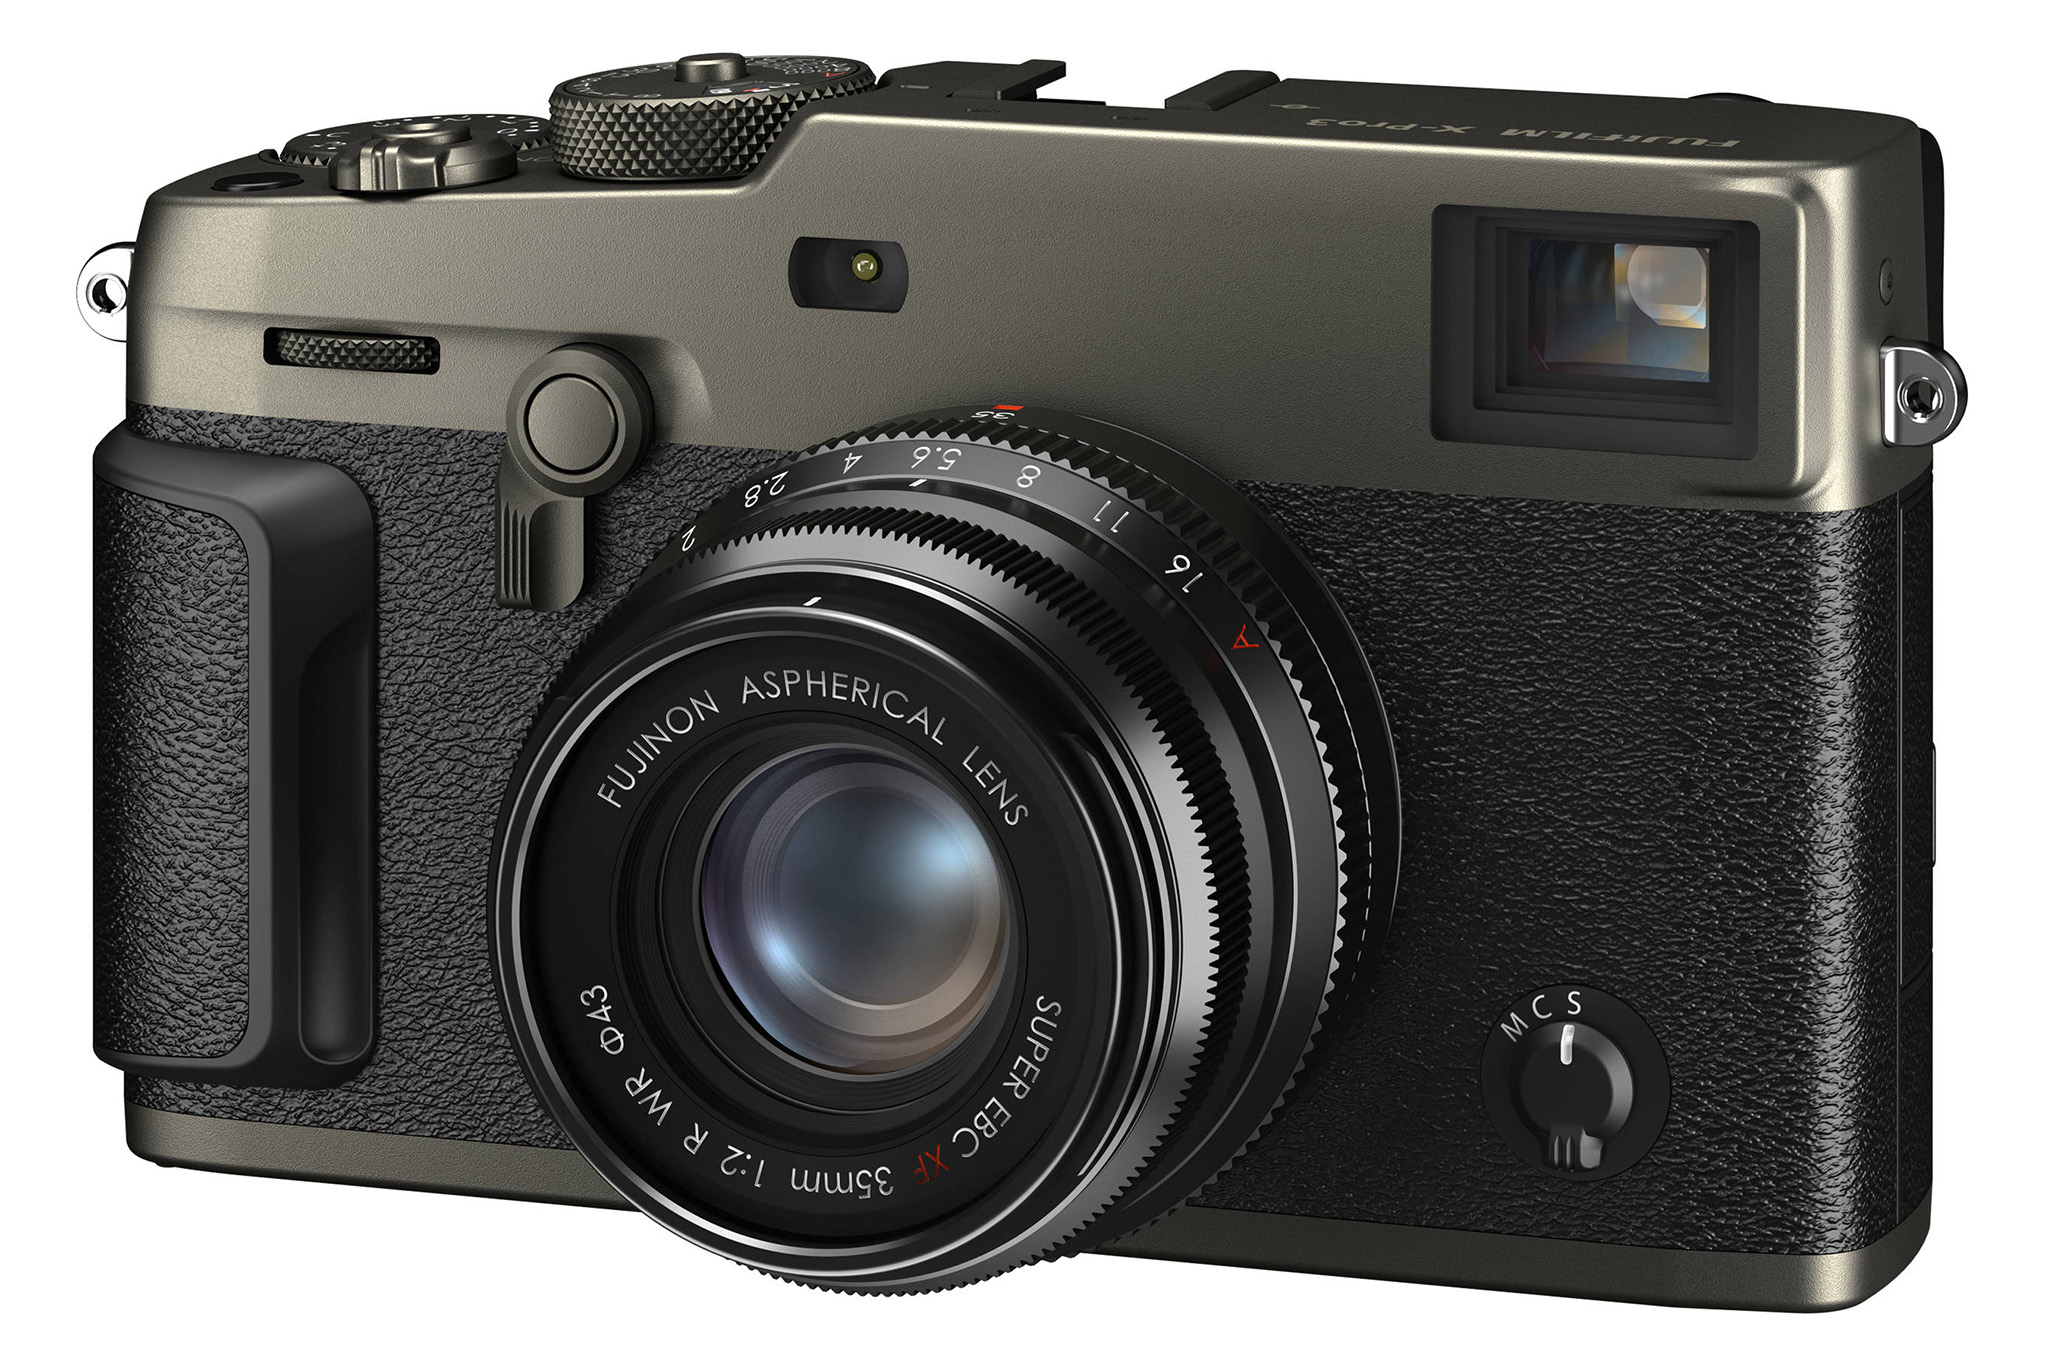 Aanval Gewond raken wazig Fuji X-Pro3 Announcement - A Street Photographer's Ultimate Camera or Just  Another Gimmick?